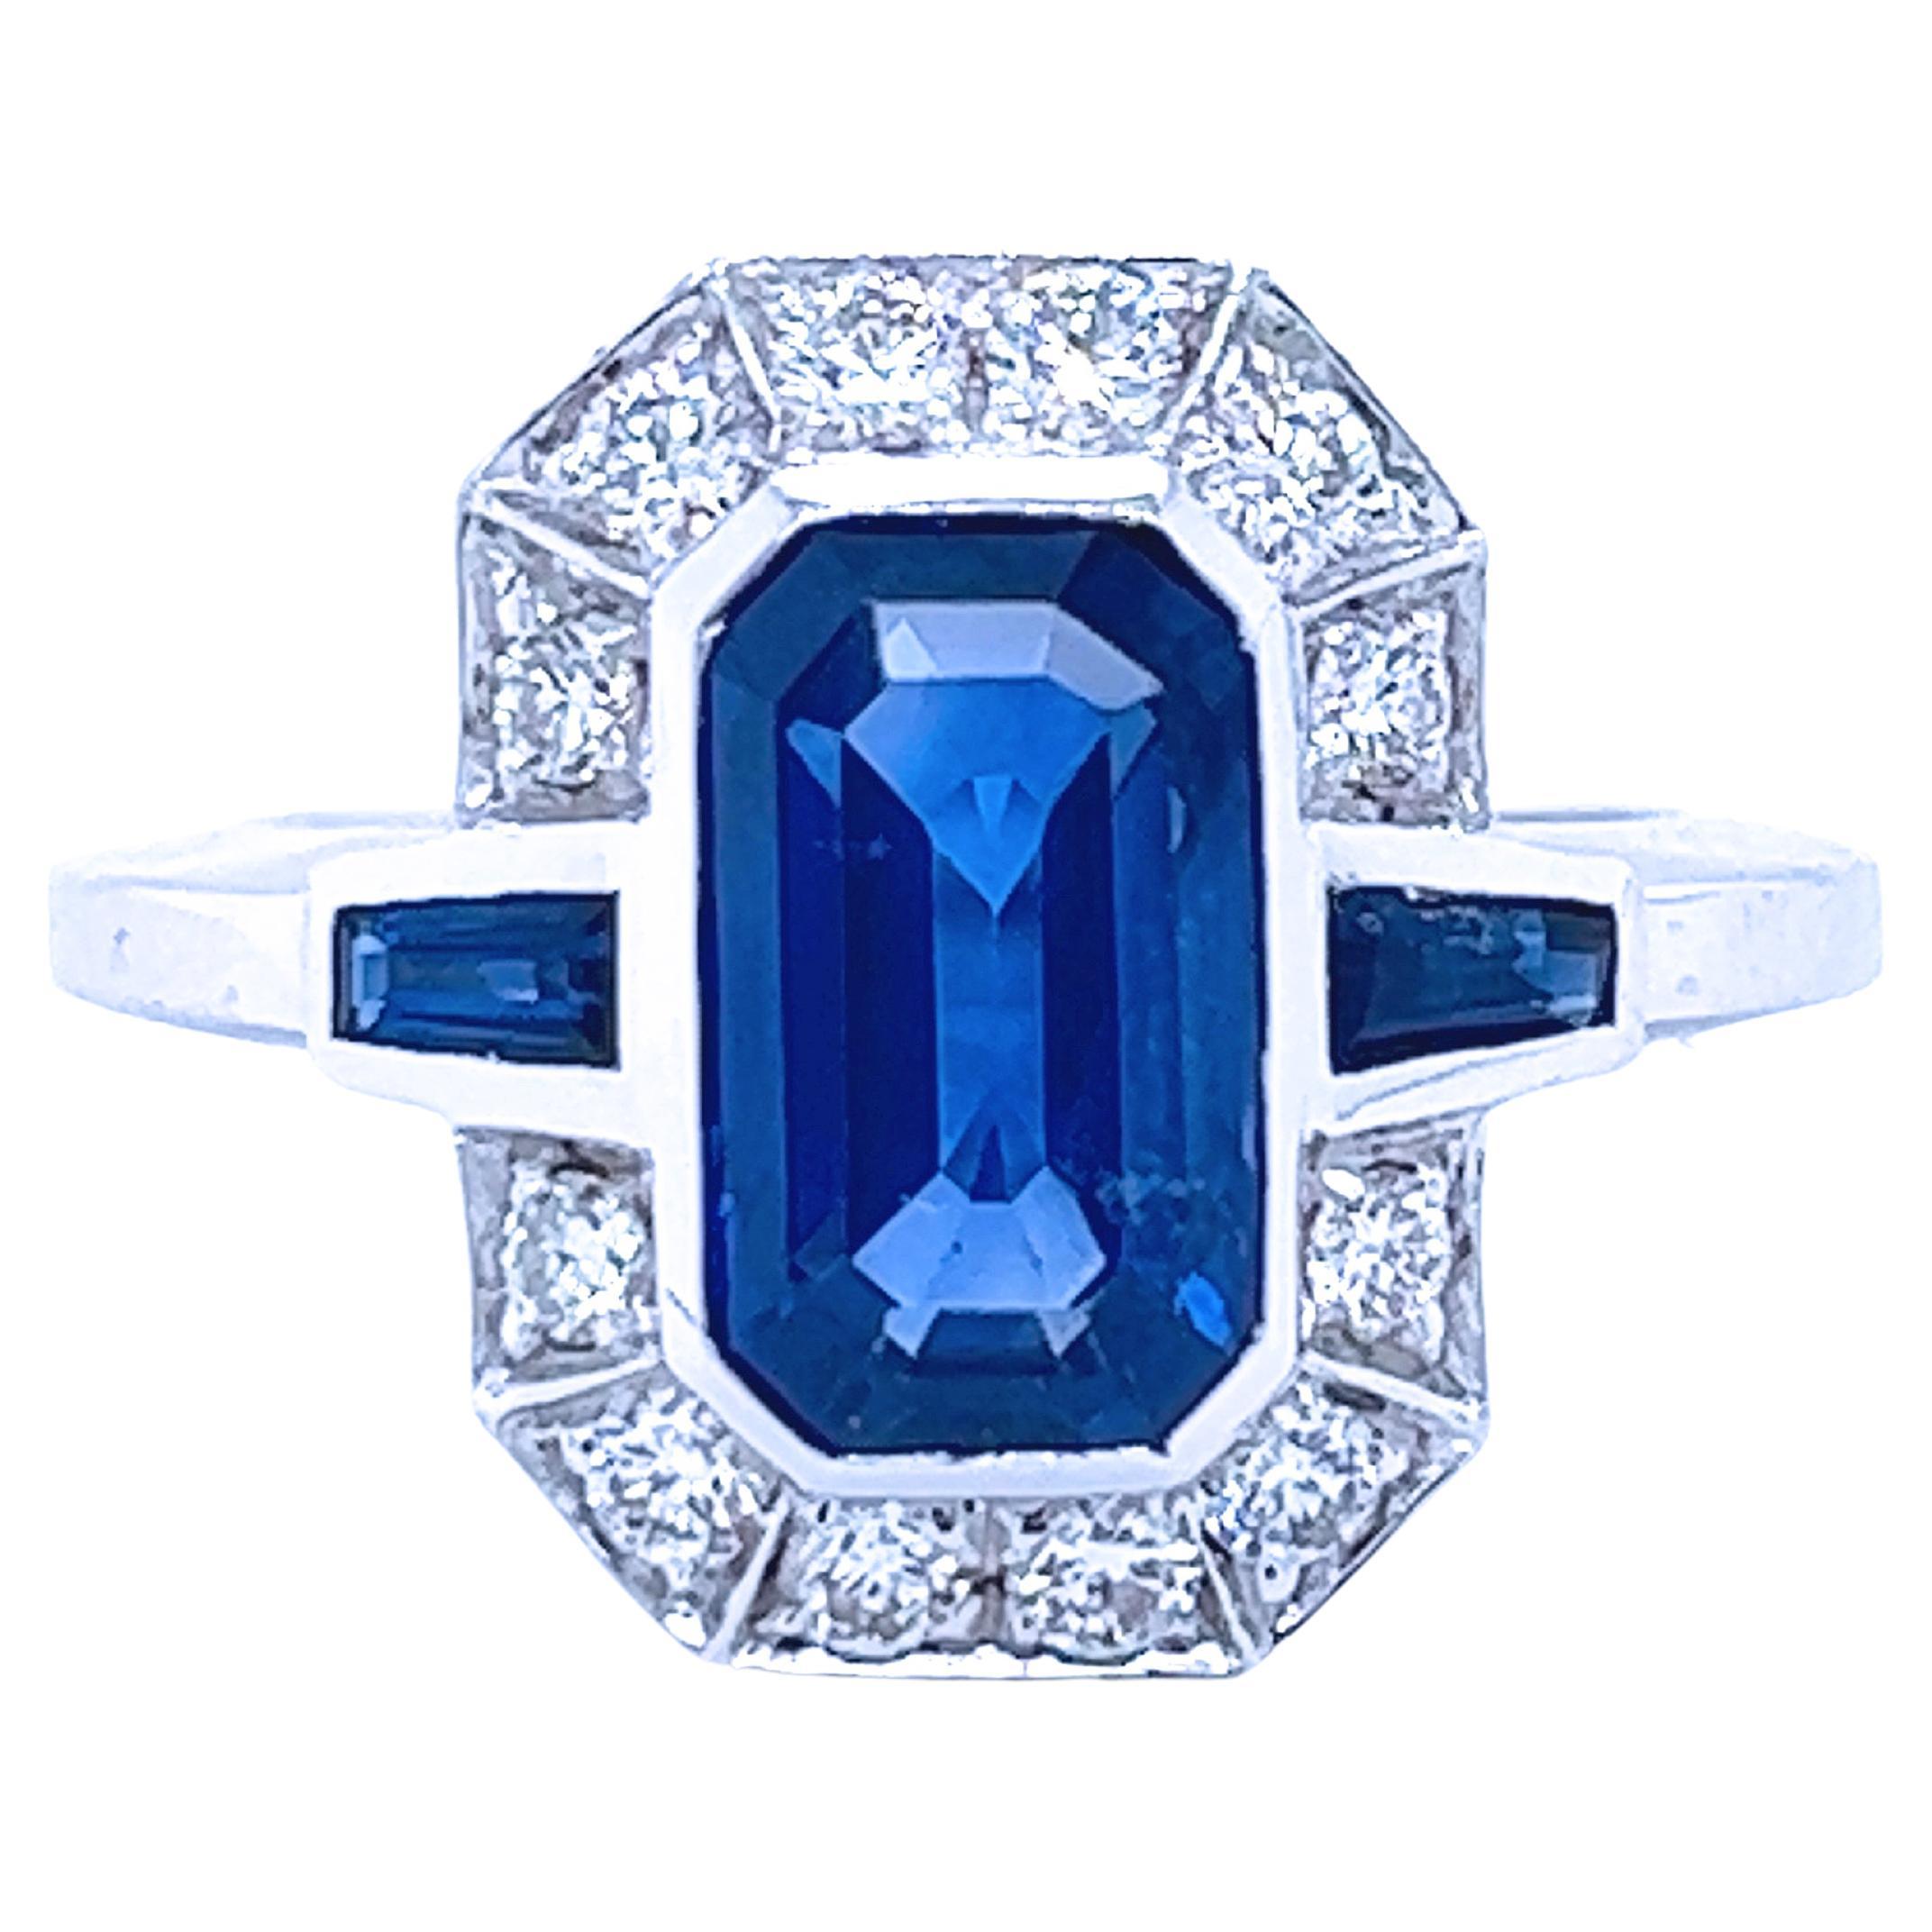 Berca 3.17kt Igi Certified Royal Blue Sapphire Emerald Cut Diamond Ring